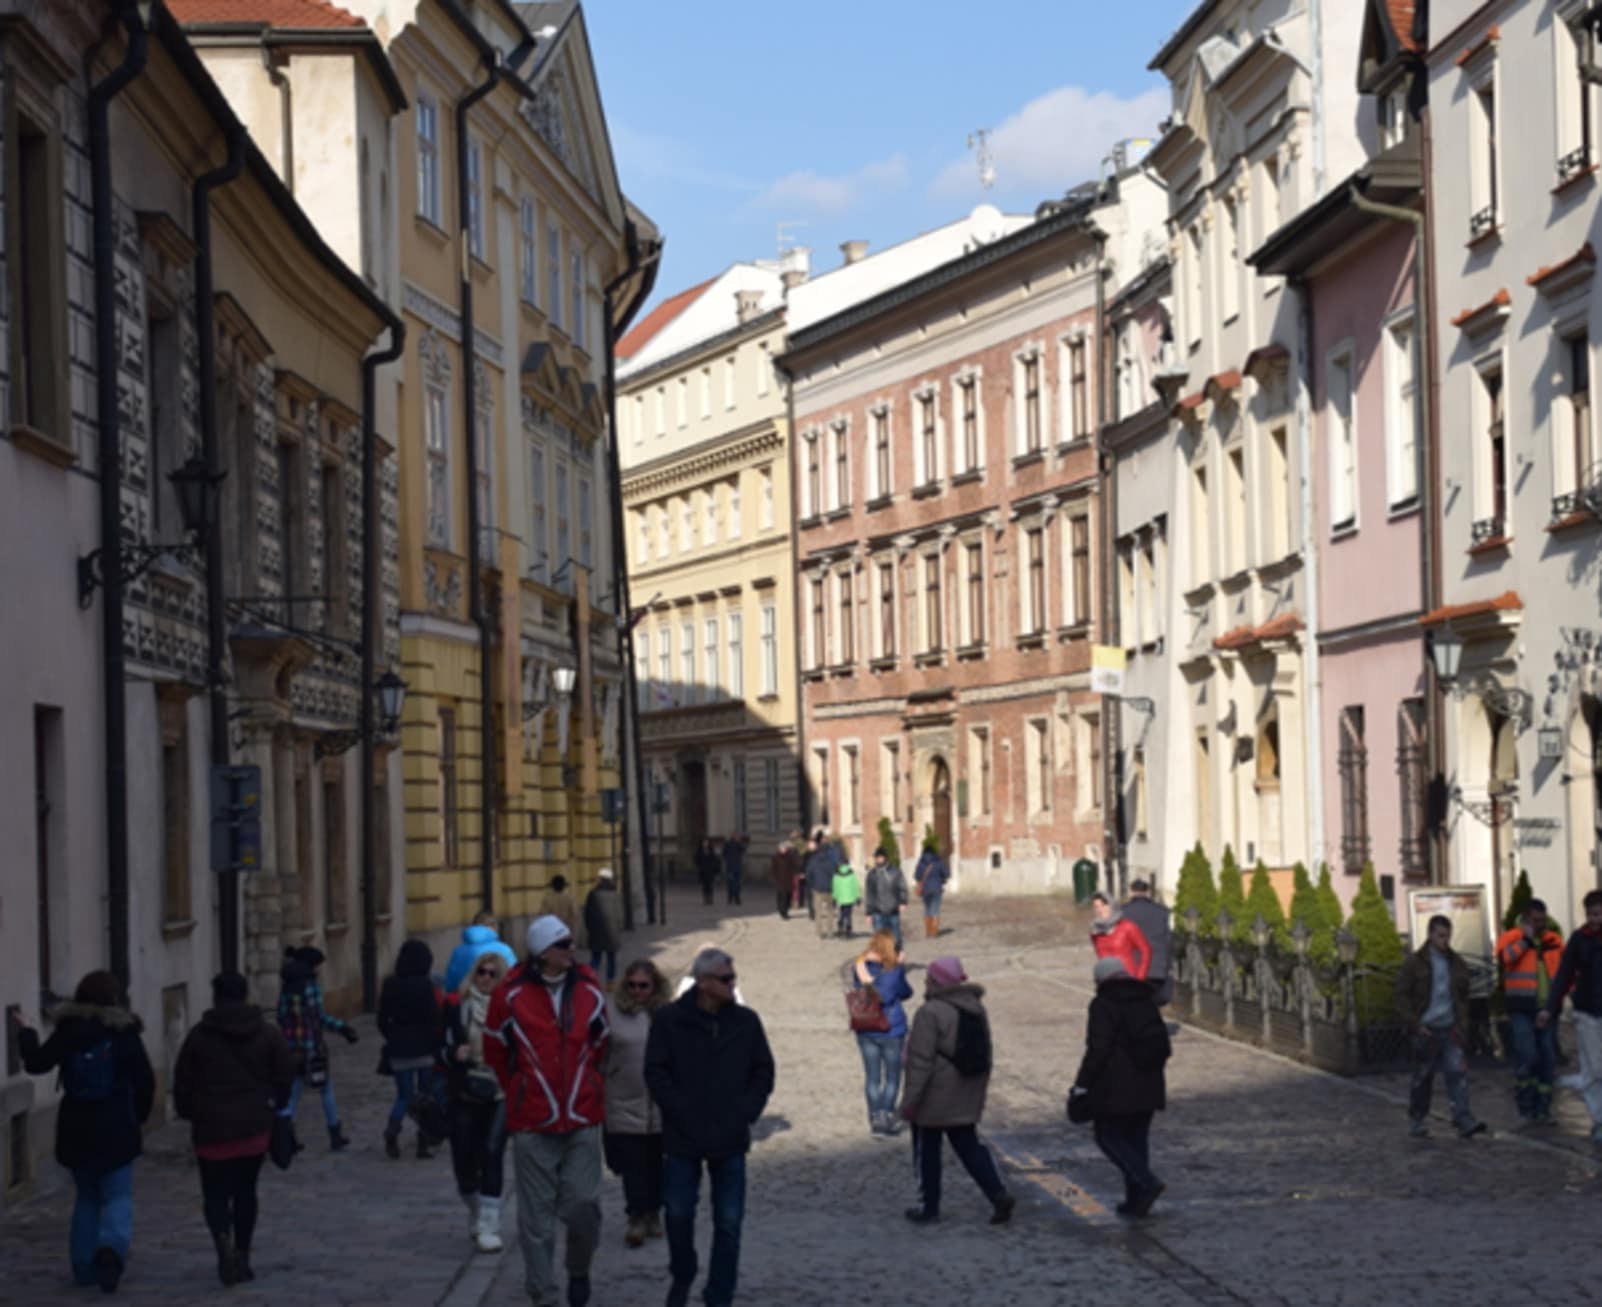 A street scene in Krakow's Old Town